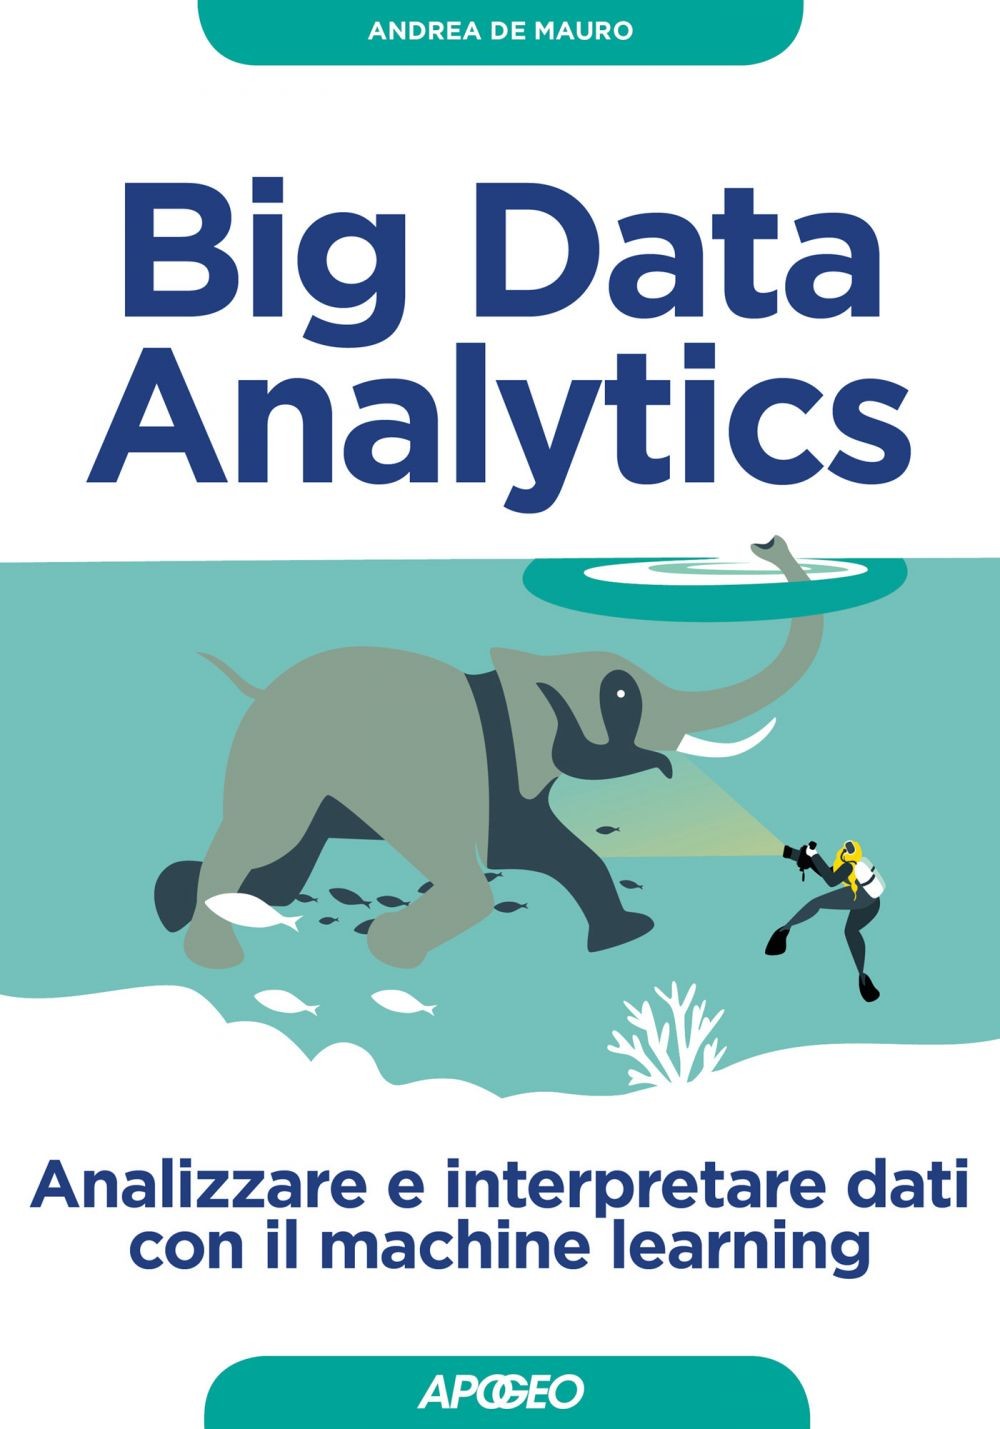 Big Data Analytics - Librerie.coop